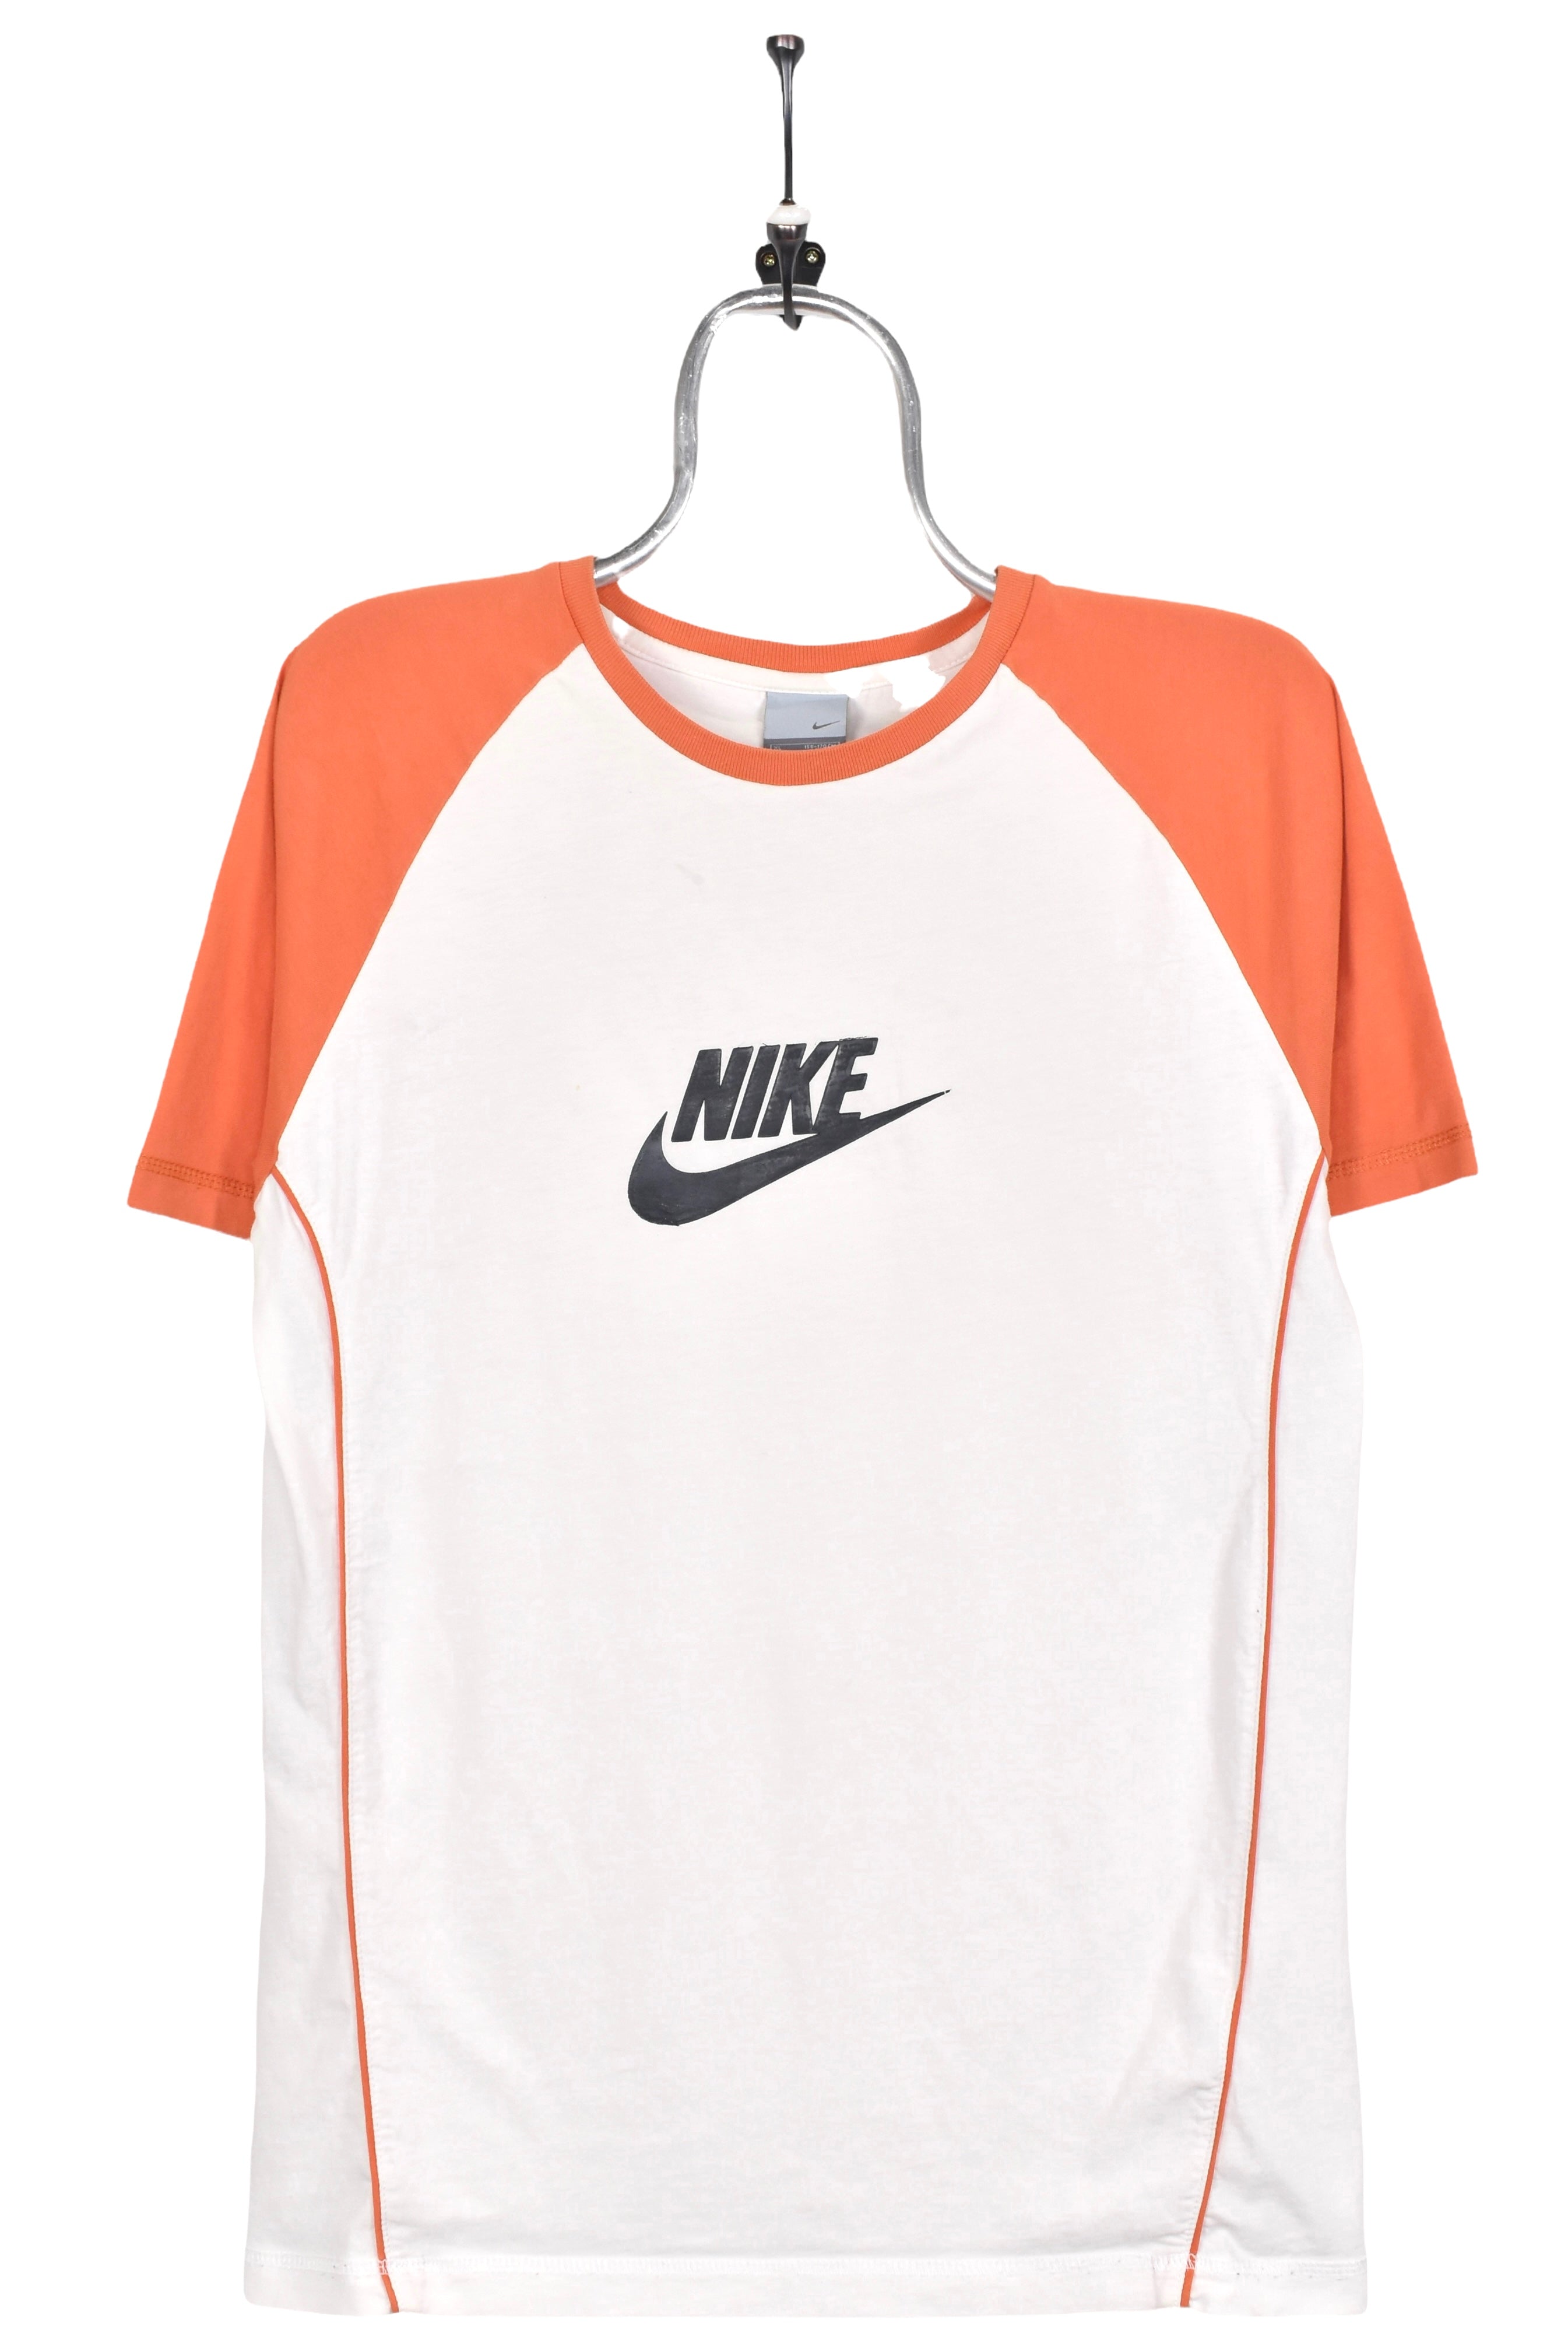 Vintage Nike shirt, white graphic tee - AU Small NIKE